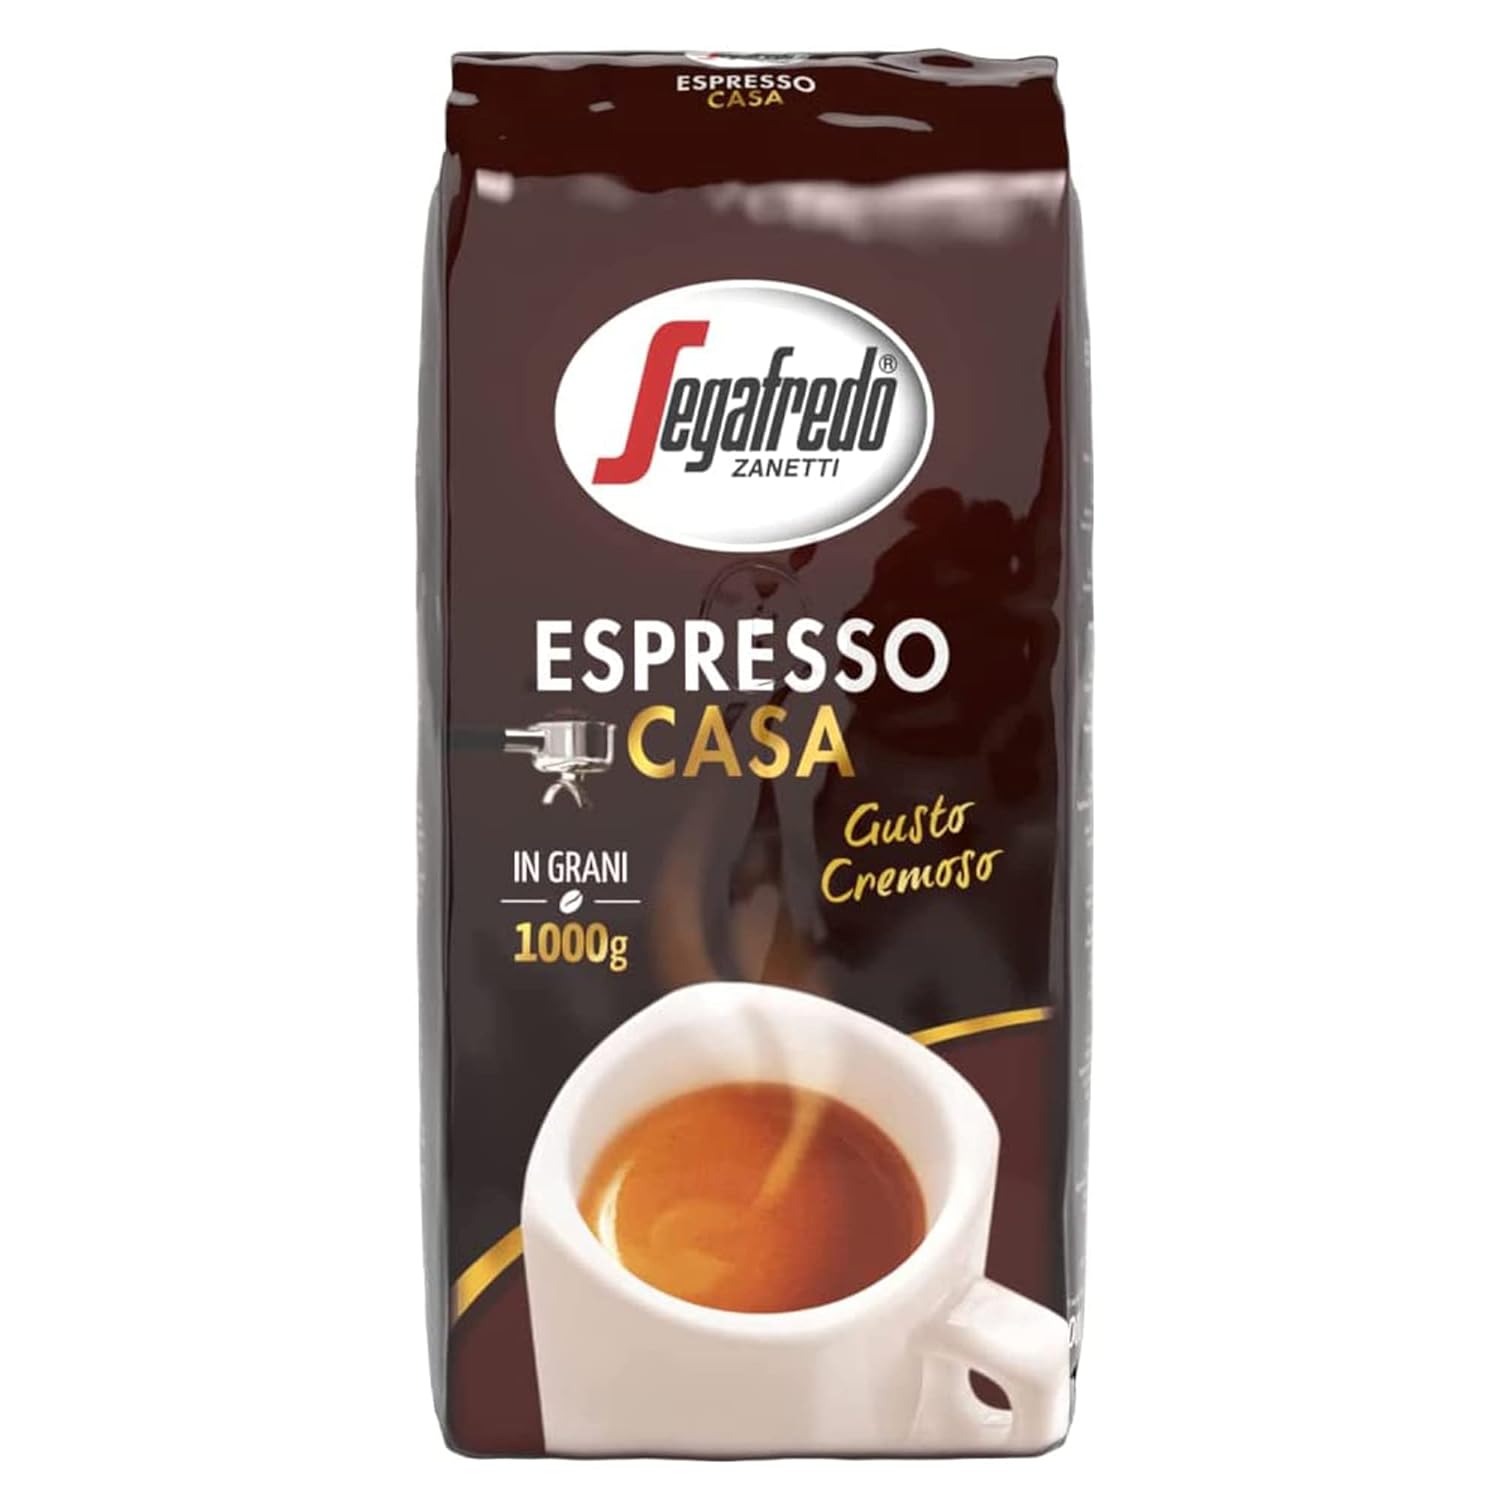 Segafredo Zanetti Espresso Casa - whole bean 1 kg pack) - Suitable for all Italian coffee specialties - medium roasting, full of taste with chocolate notes